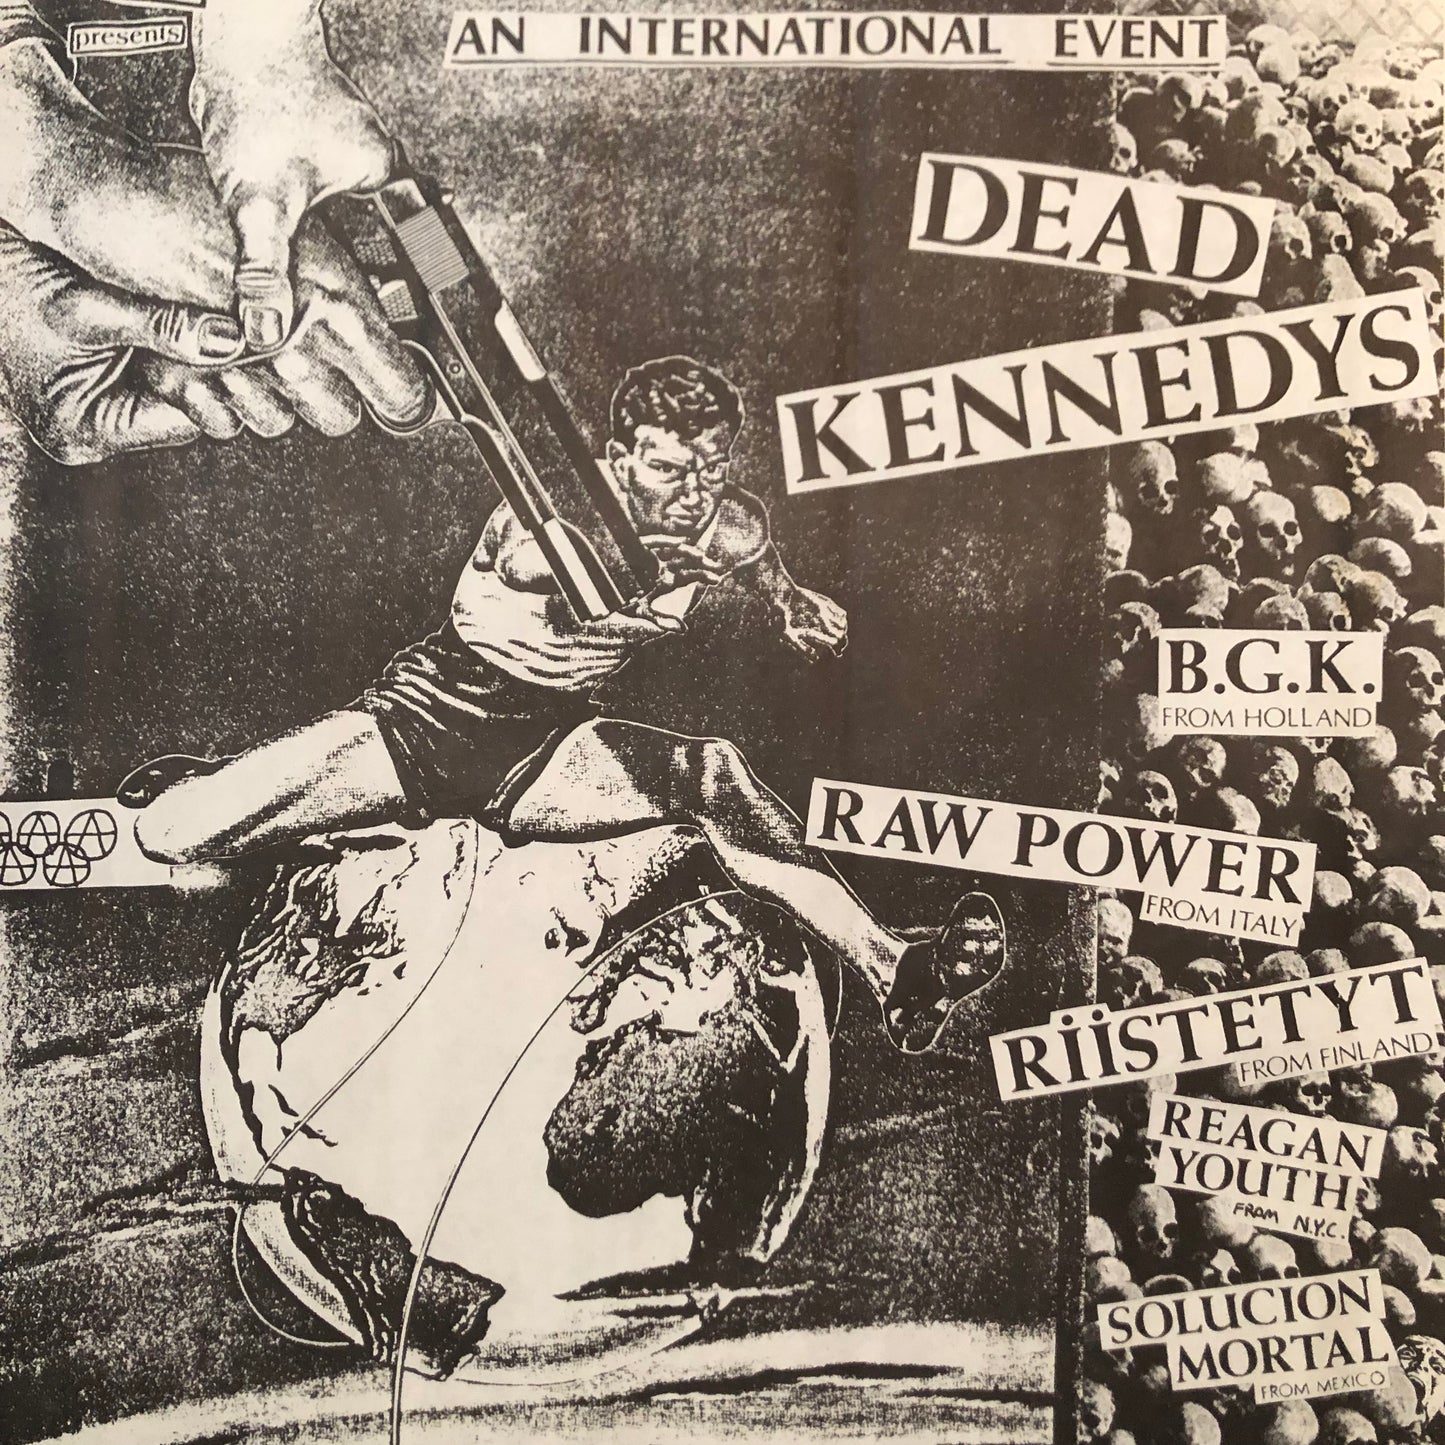 "DK / Reagan Youth / BGK / Raw Power / Riistytet / Solucion Mortal" Vintage Poster (1984)